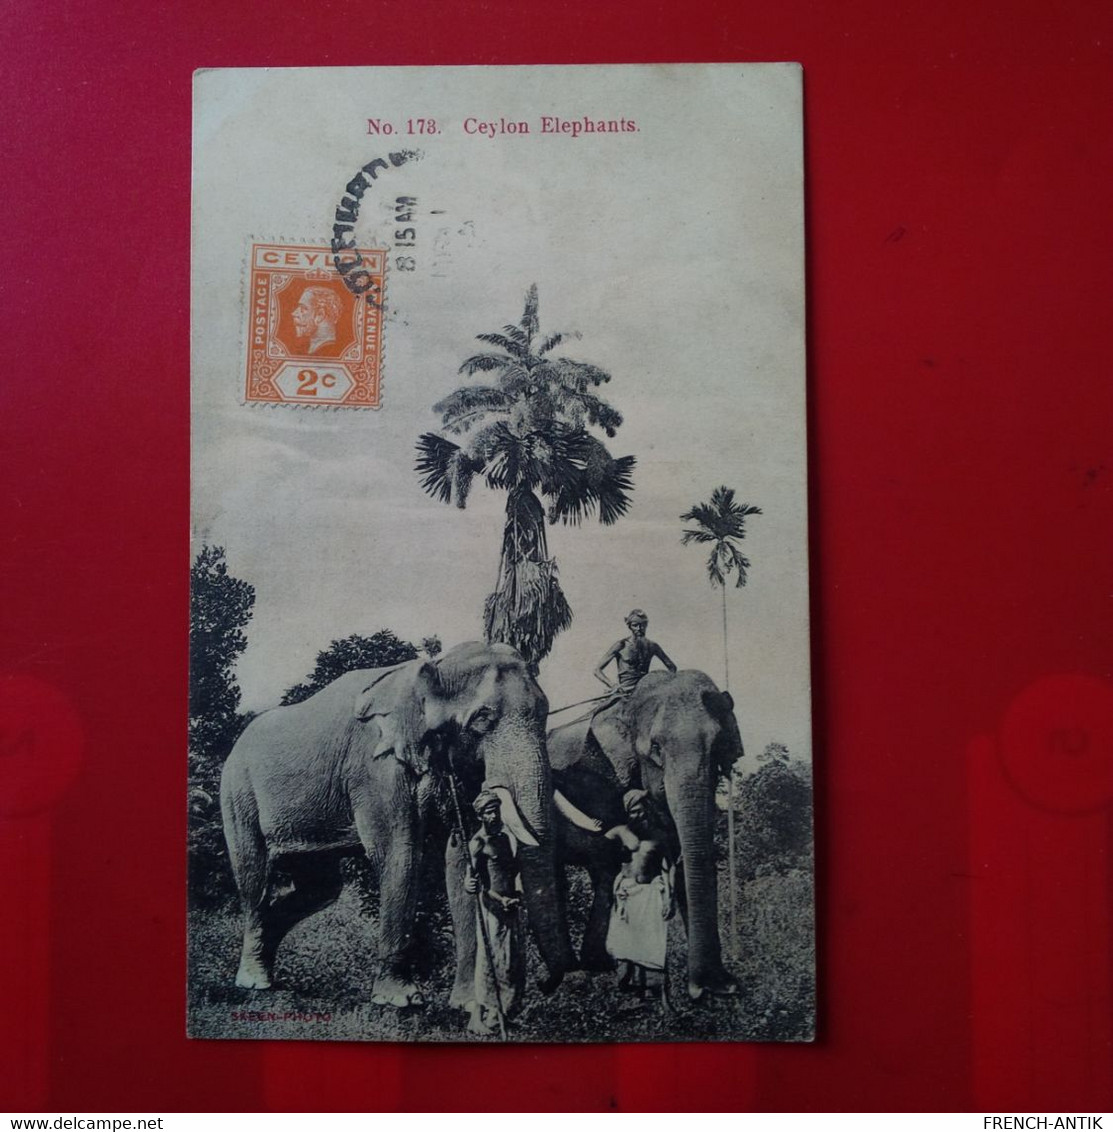 CEYLON ELEPHANTS - Sri Lanka (Ceylon)